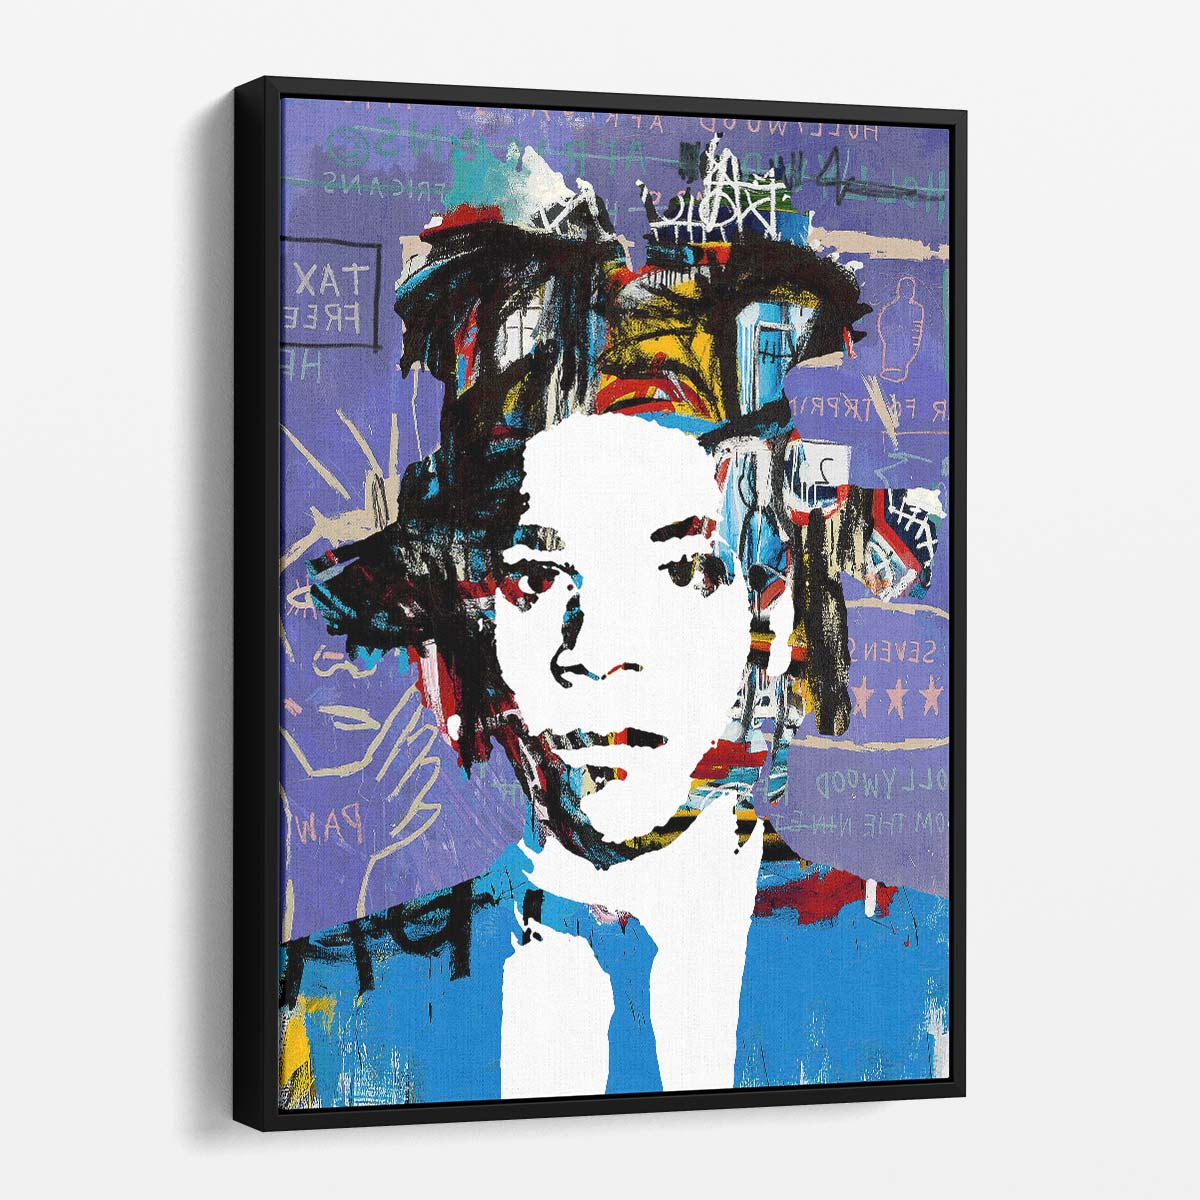 Jean-Michel Basquiat Portrait Graffiti Wall Art by Luxuriance Designs. Made in USA.